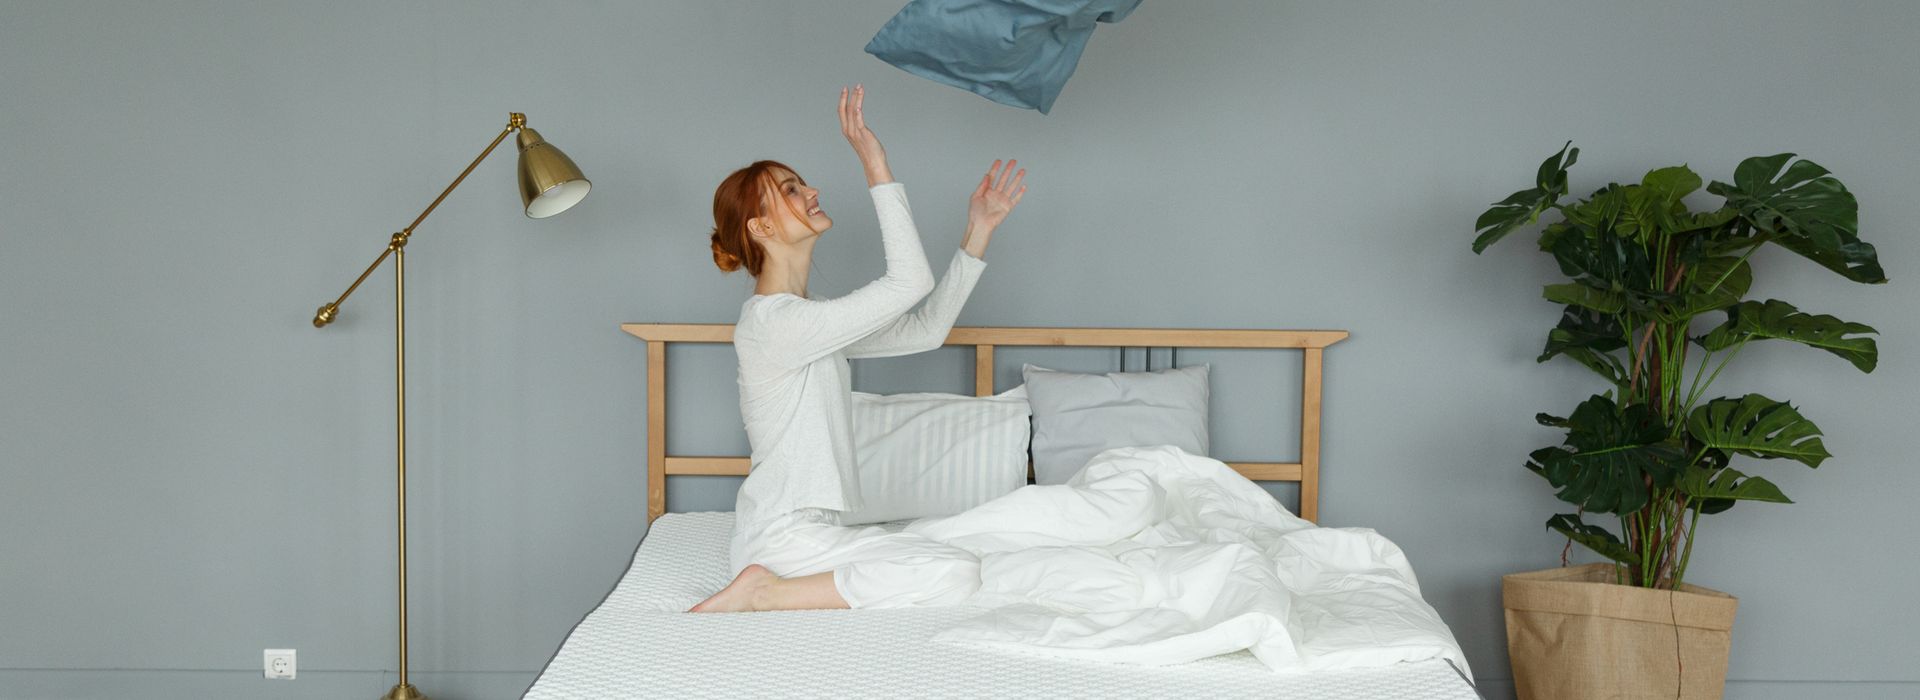 Sleep Centre Spain - We have your mattress